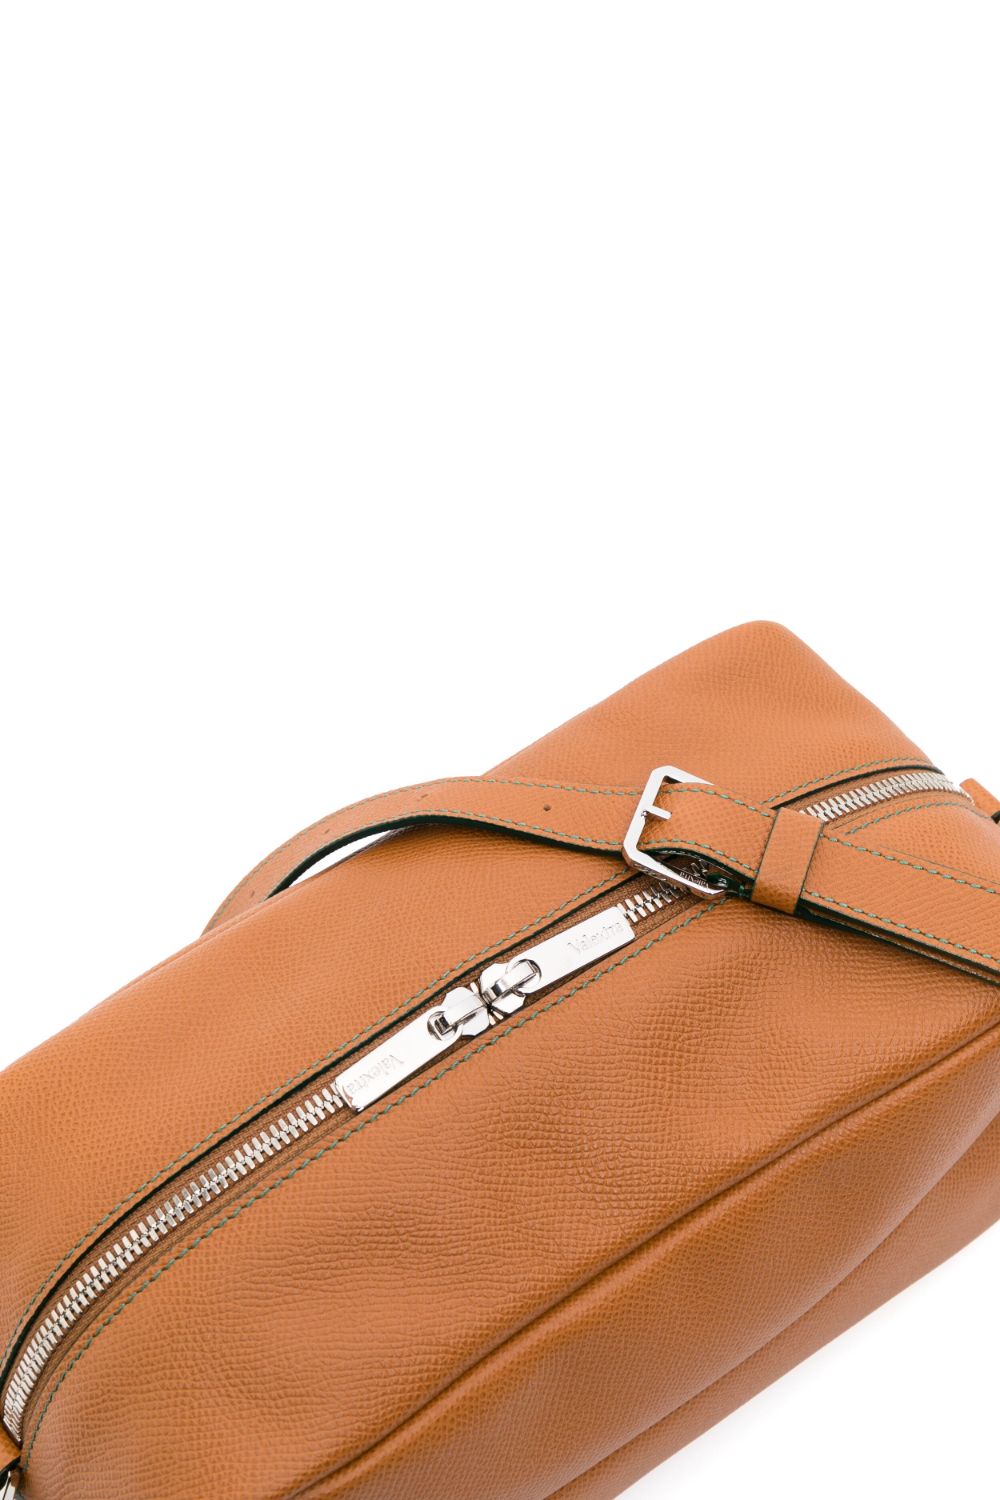 Valextra VALEXTRA- Foldable Leather Travel Bag